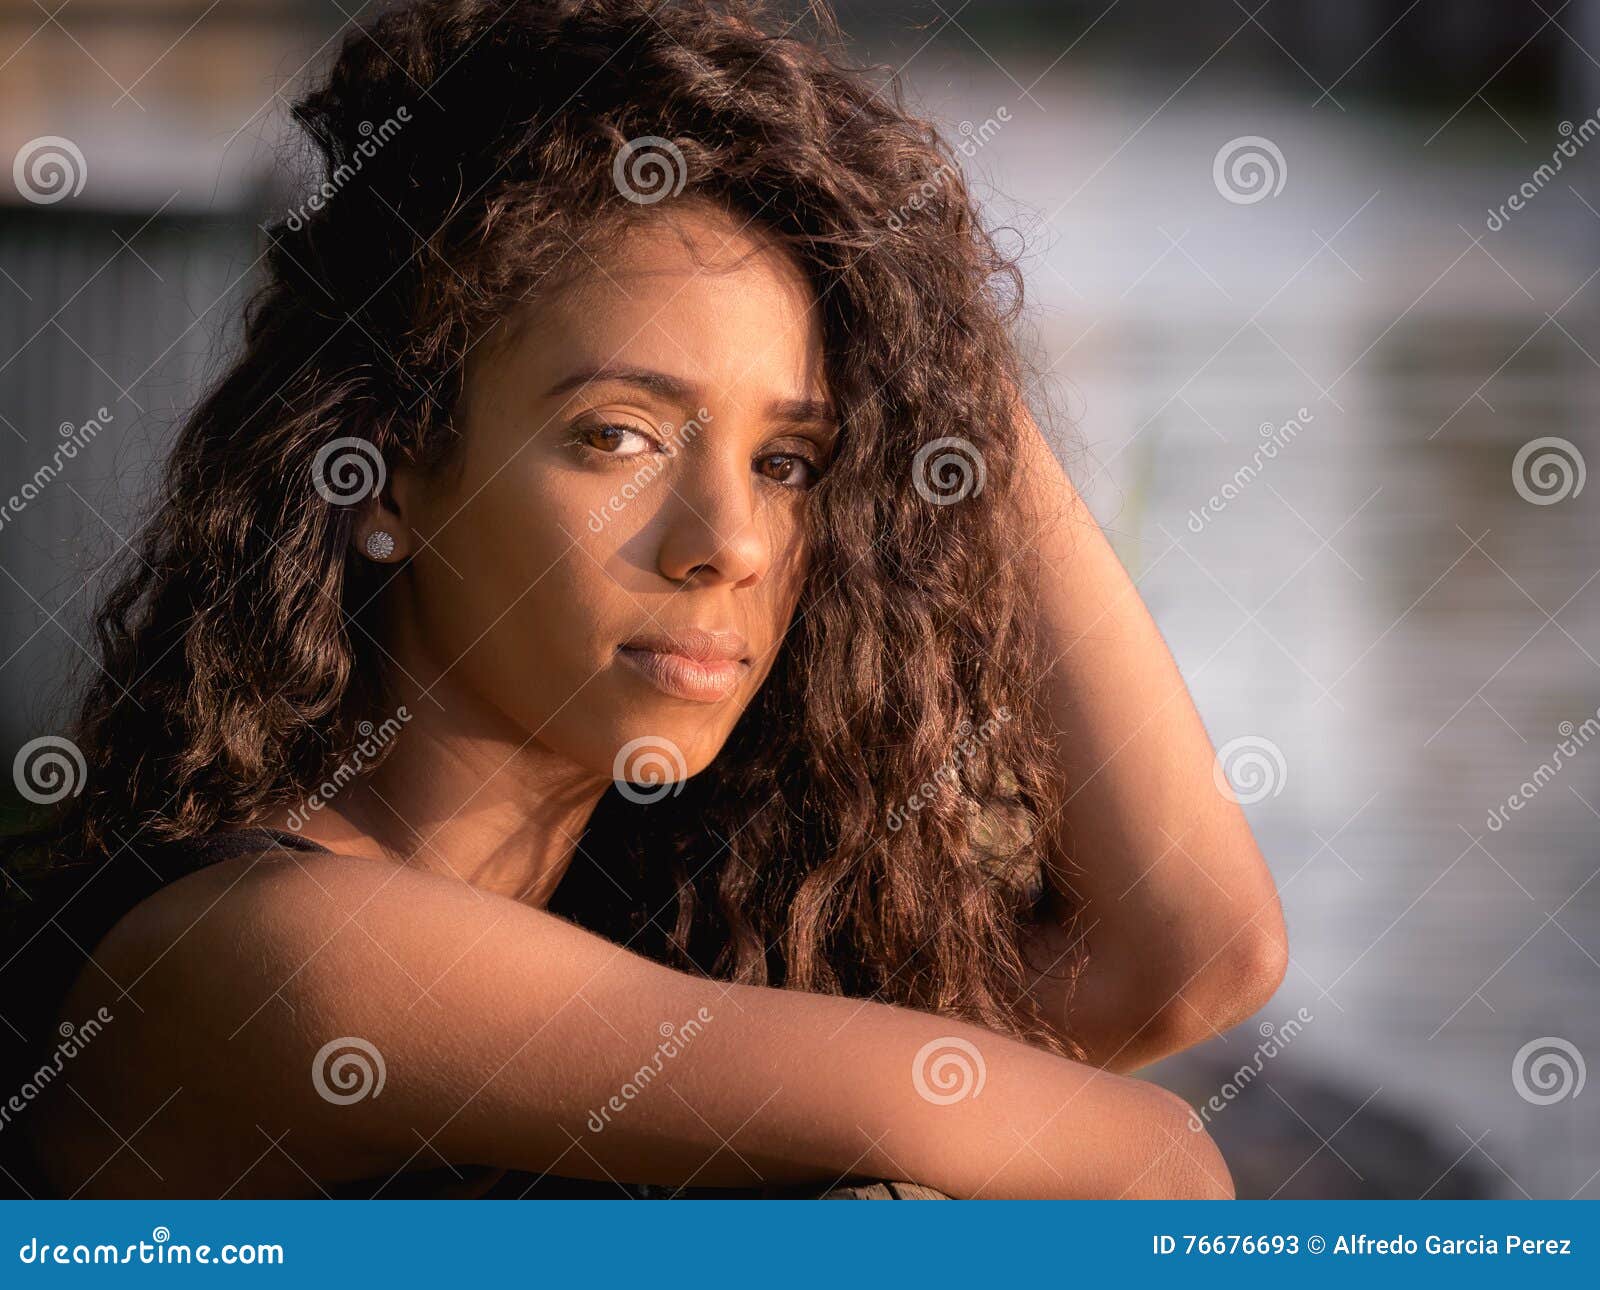 https://thumbs.dreamstime.com/z/portrait-young-beautiful-latina-woman-looking-camera-natural-light-76676693.jpg